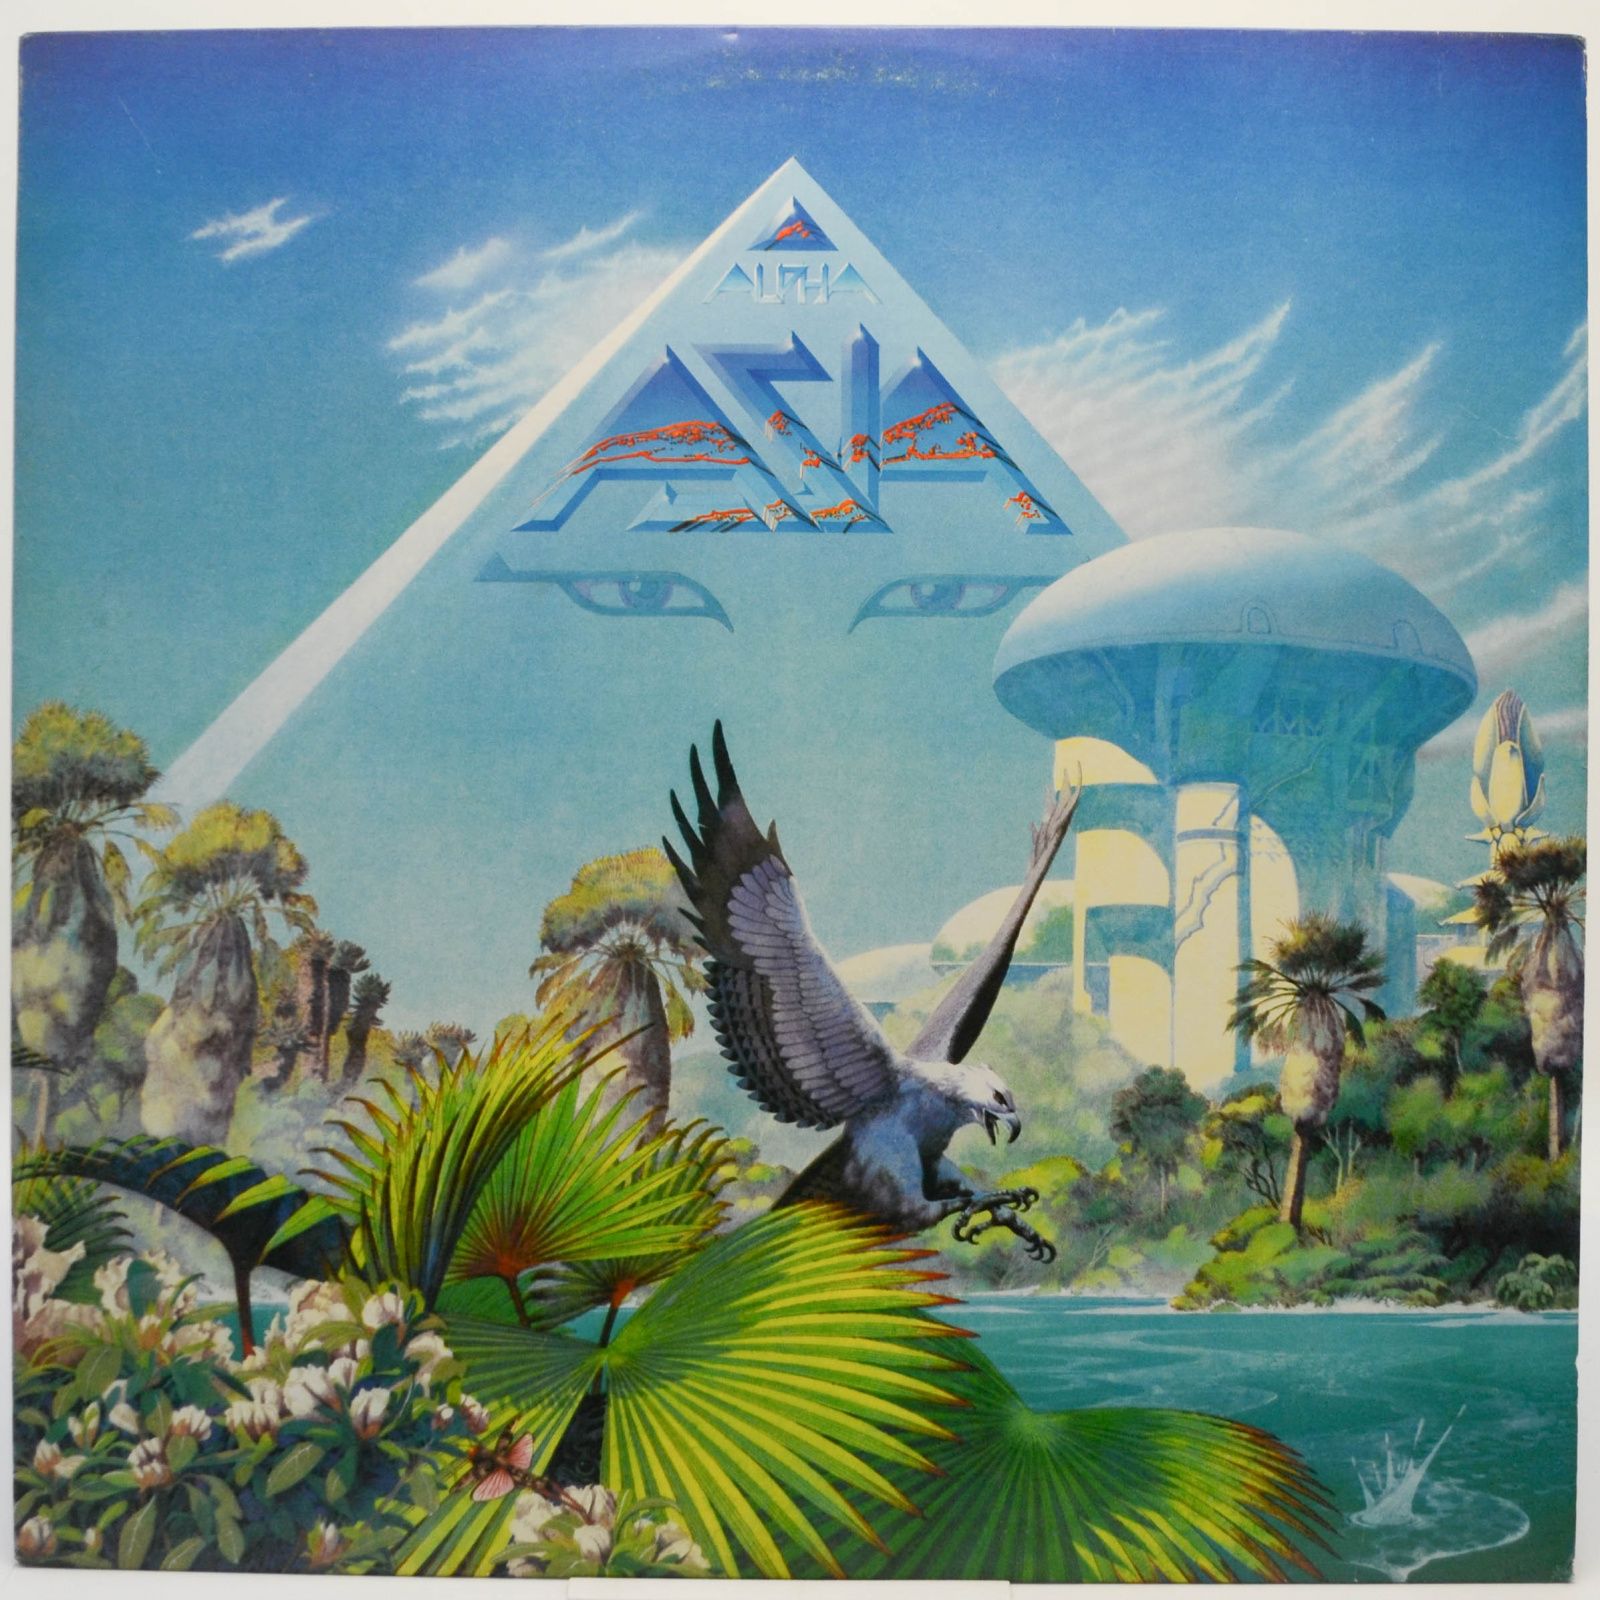 Alpha (USA), 1983